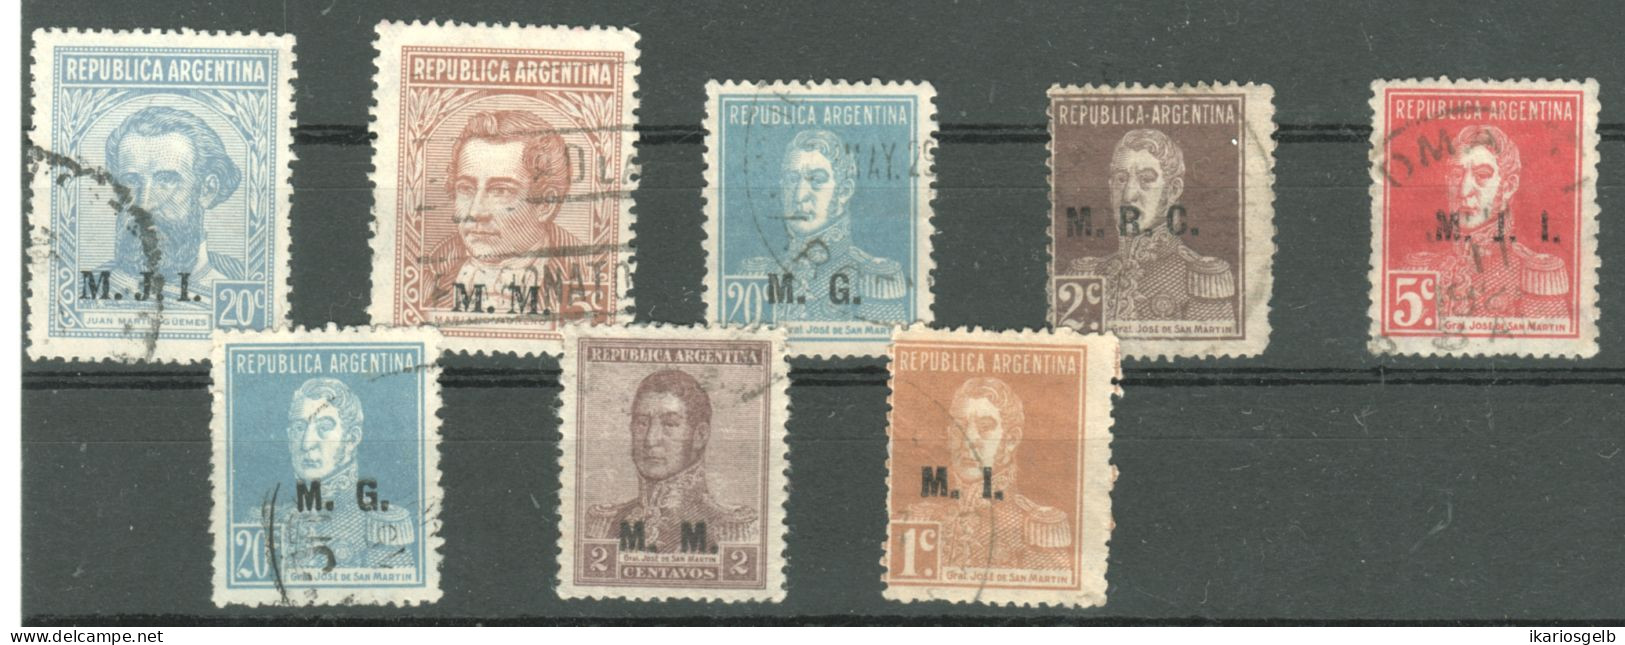 ARGENTINIEN Argentina ~1924 Lot 8 Marken + Ministerial-Aufdrucke M.I.I. - M.M. - M.G. - M.I. = Ministry Overprints - Officials